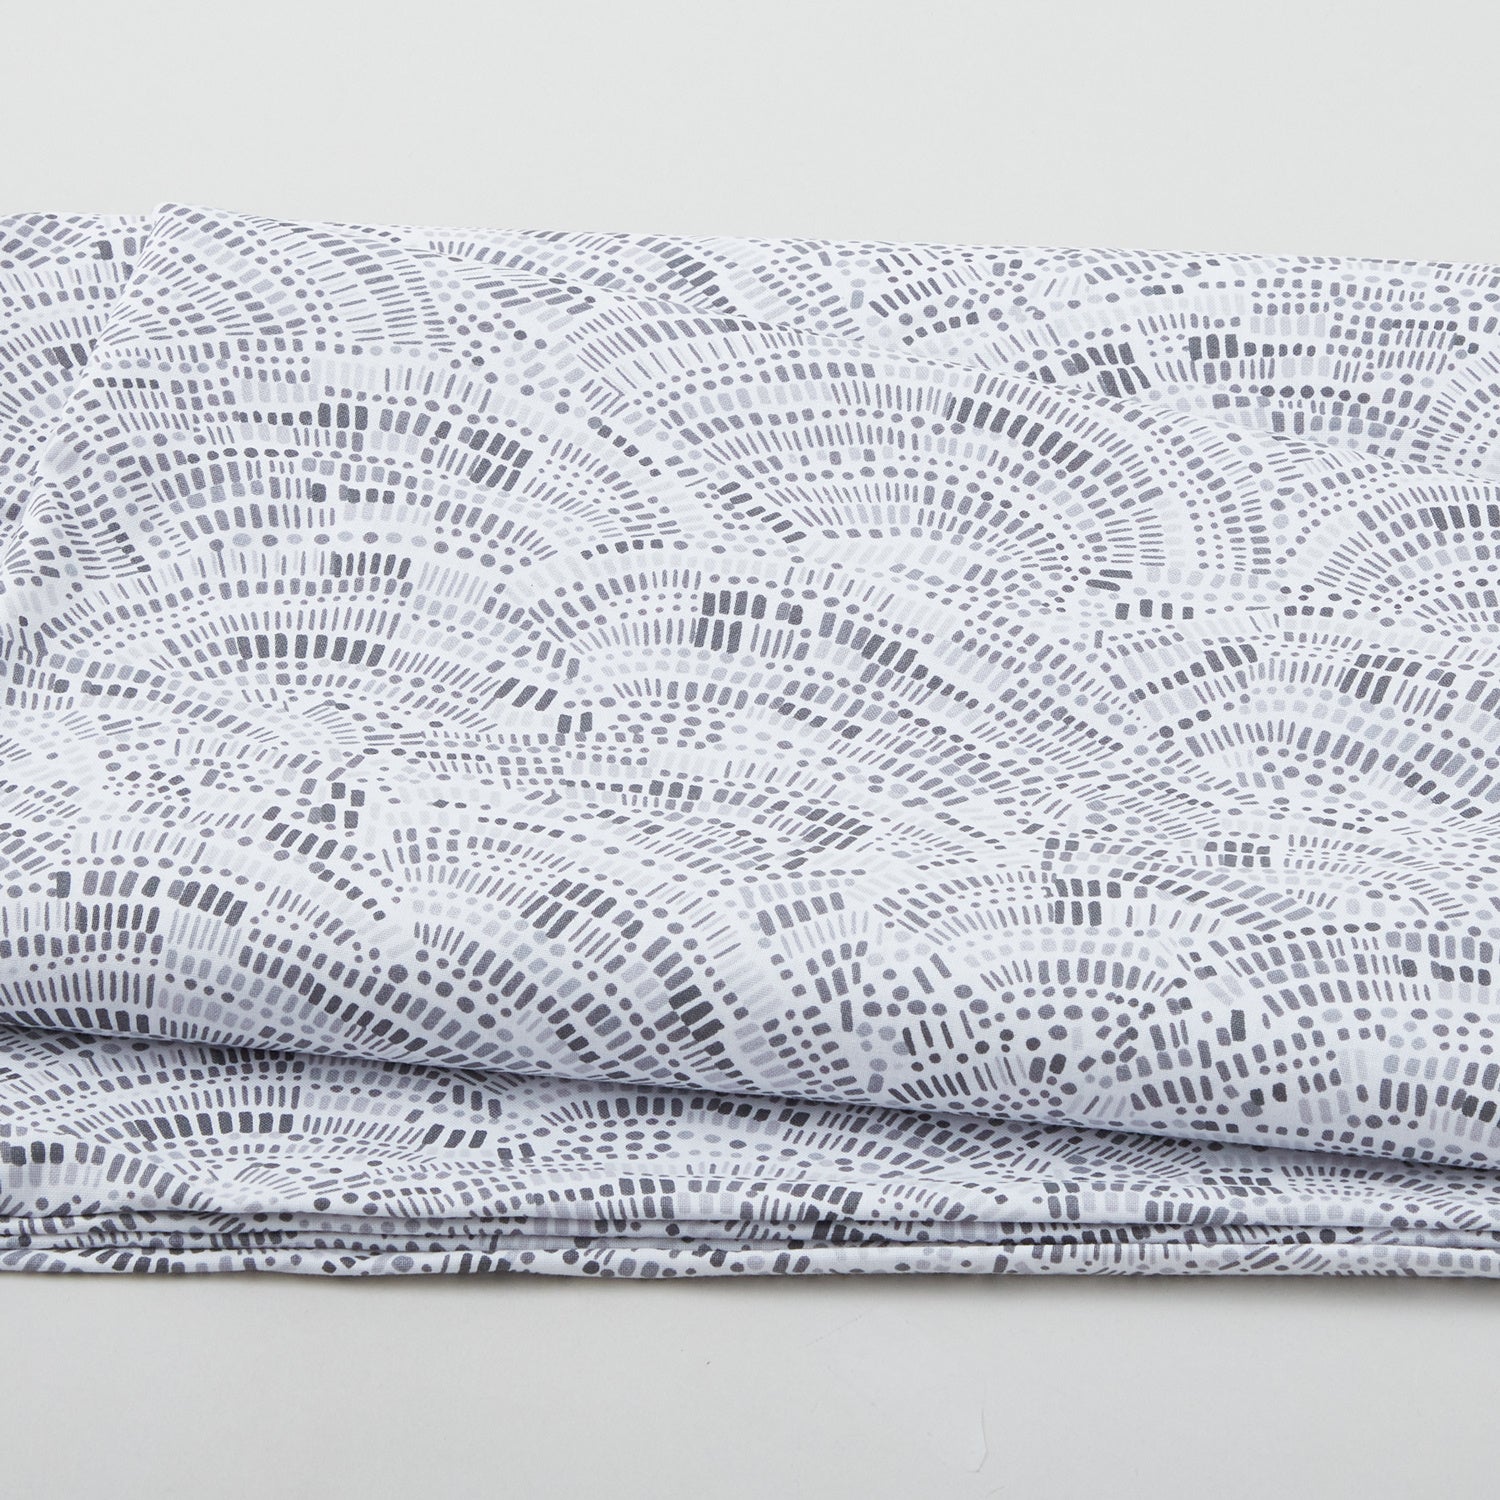 Lovely Day Swirls Love Fabric - Robert Kaufman Fabrics AHVD22255